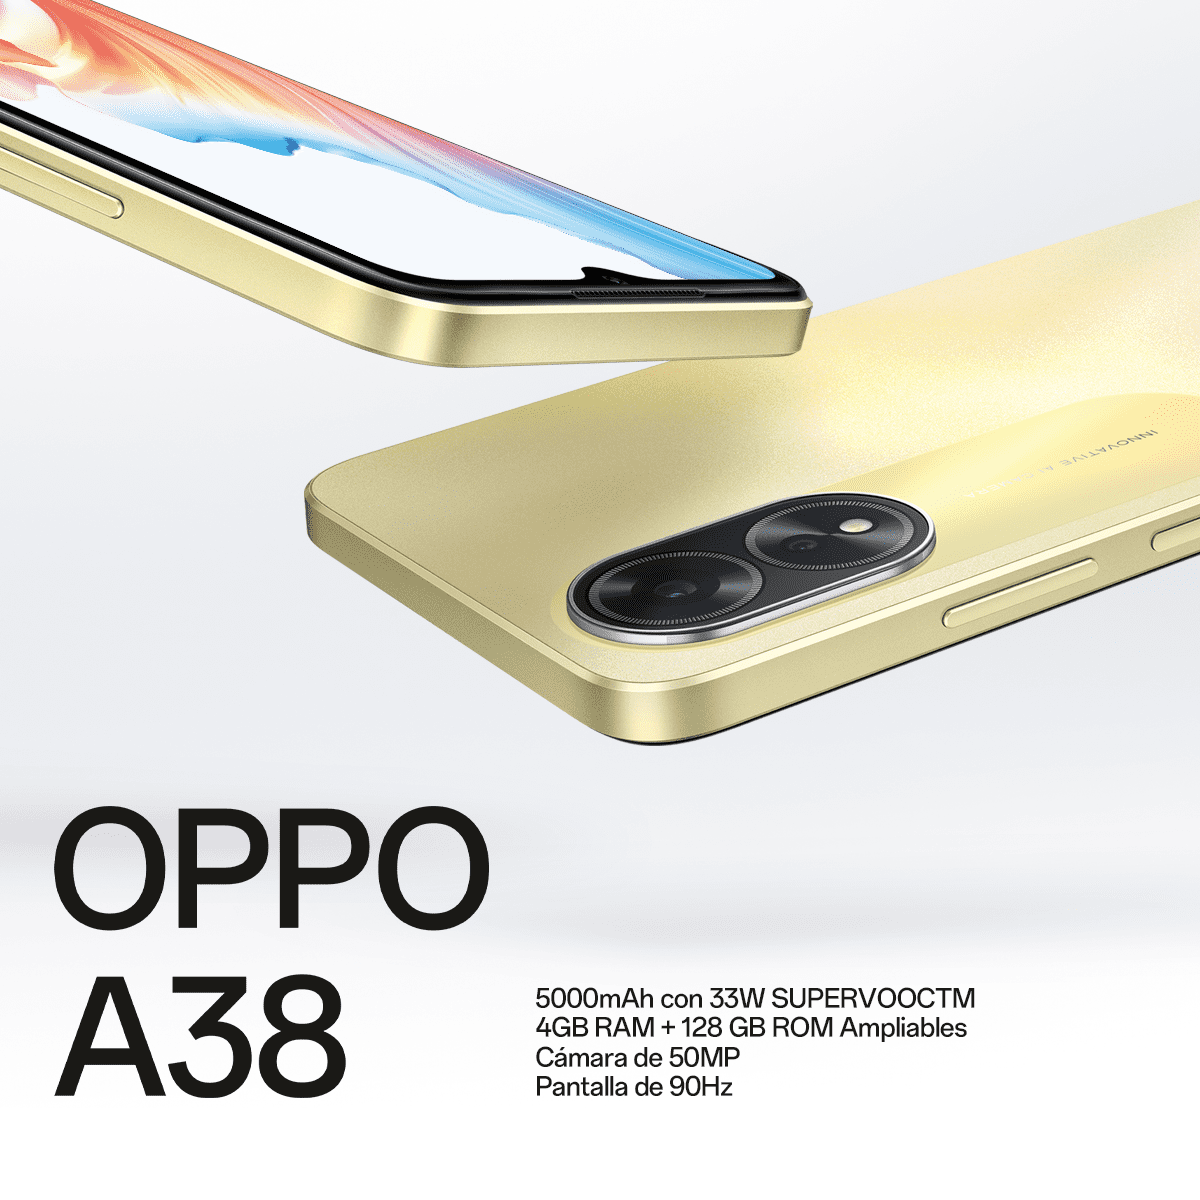 Smartphone A38 OPPO